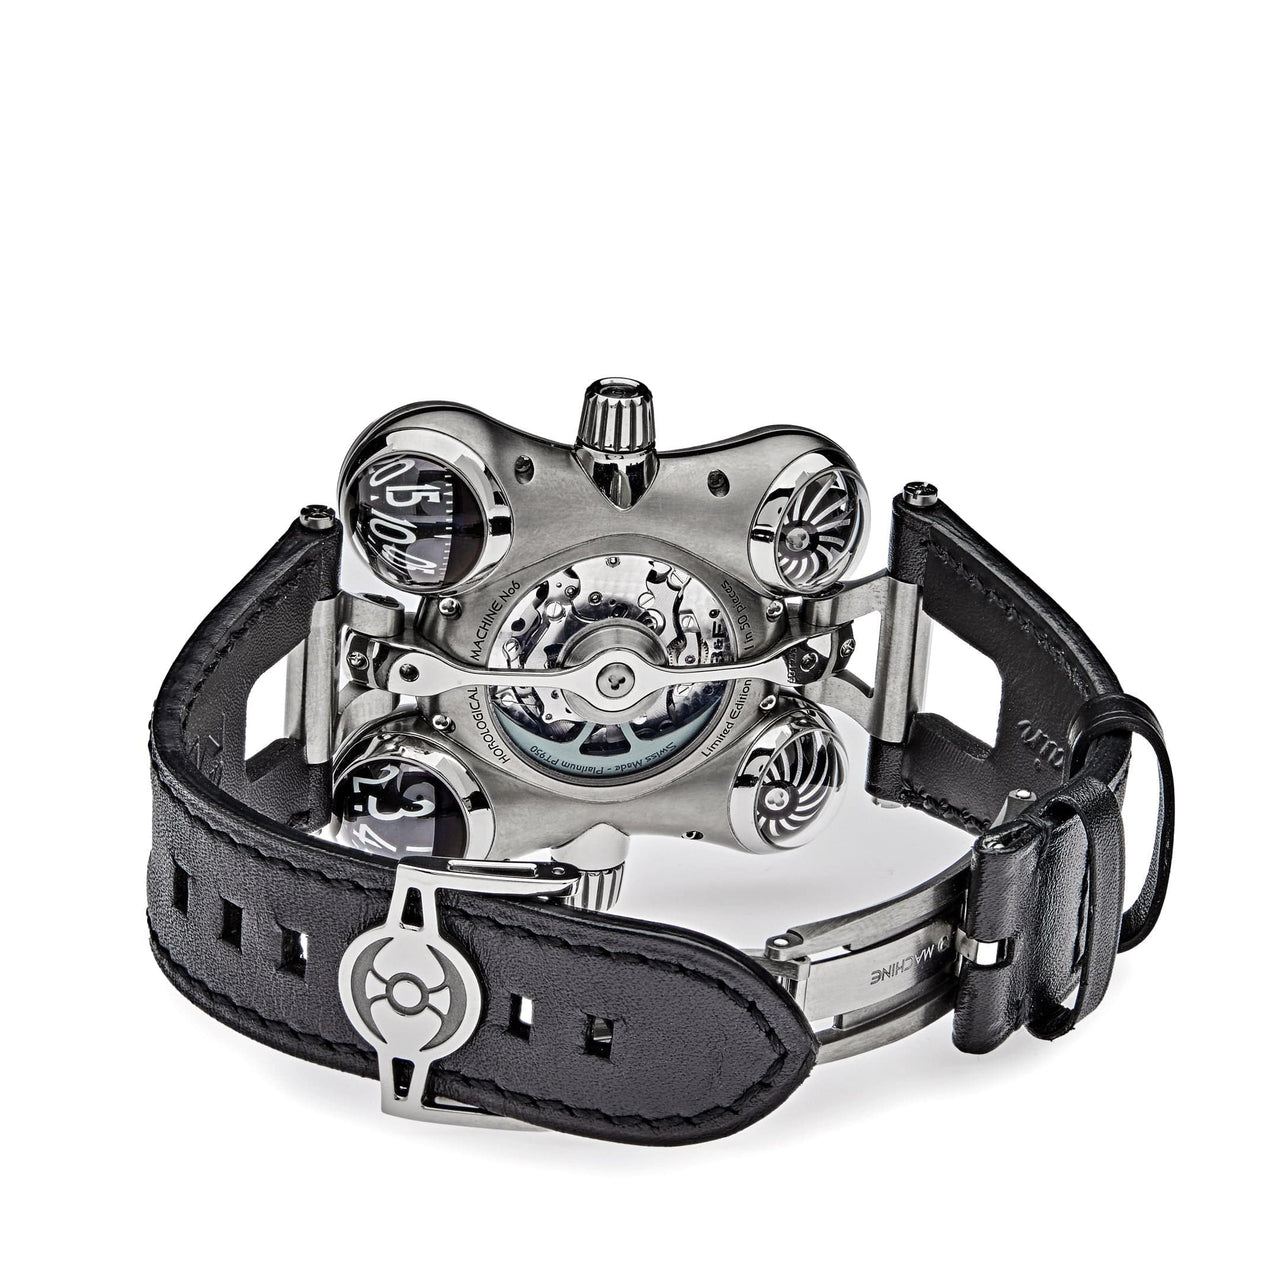 Luxury Watch MB&F Horological Machine N6 Titanium Limited to 50pcs Wrist Aficionado